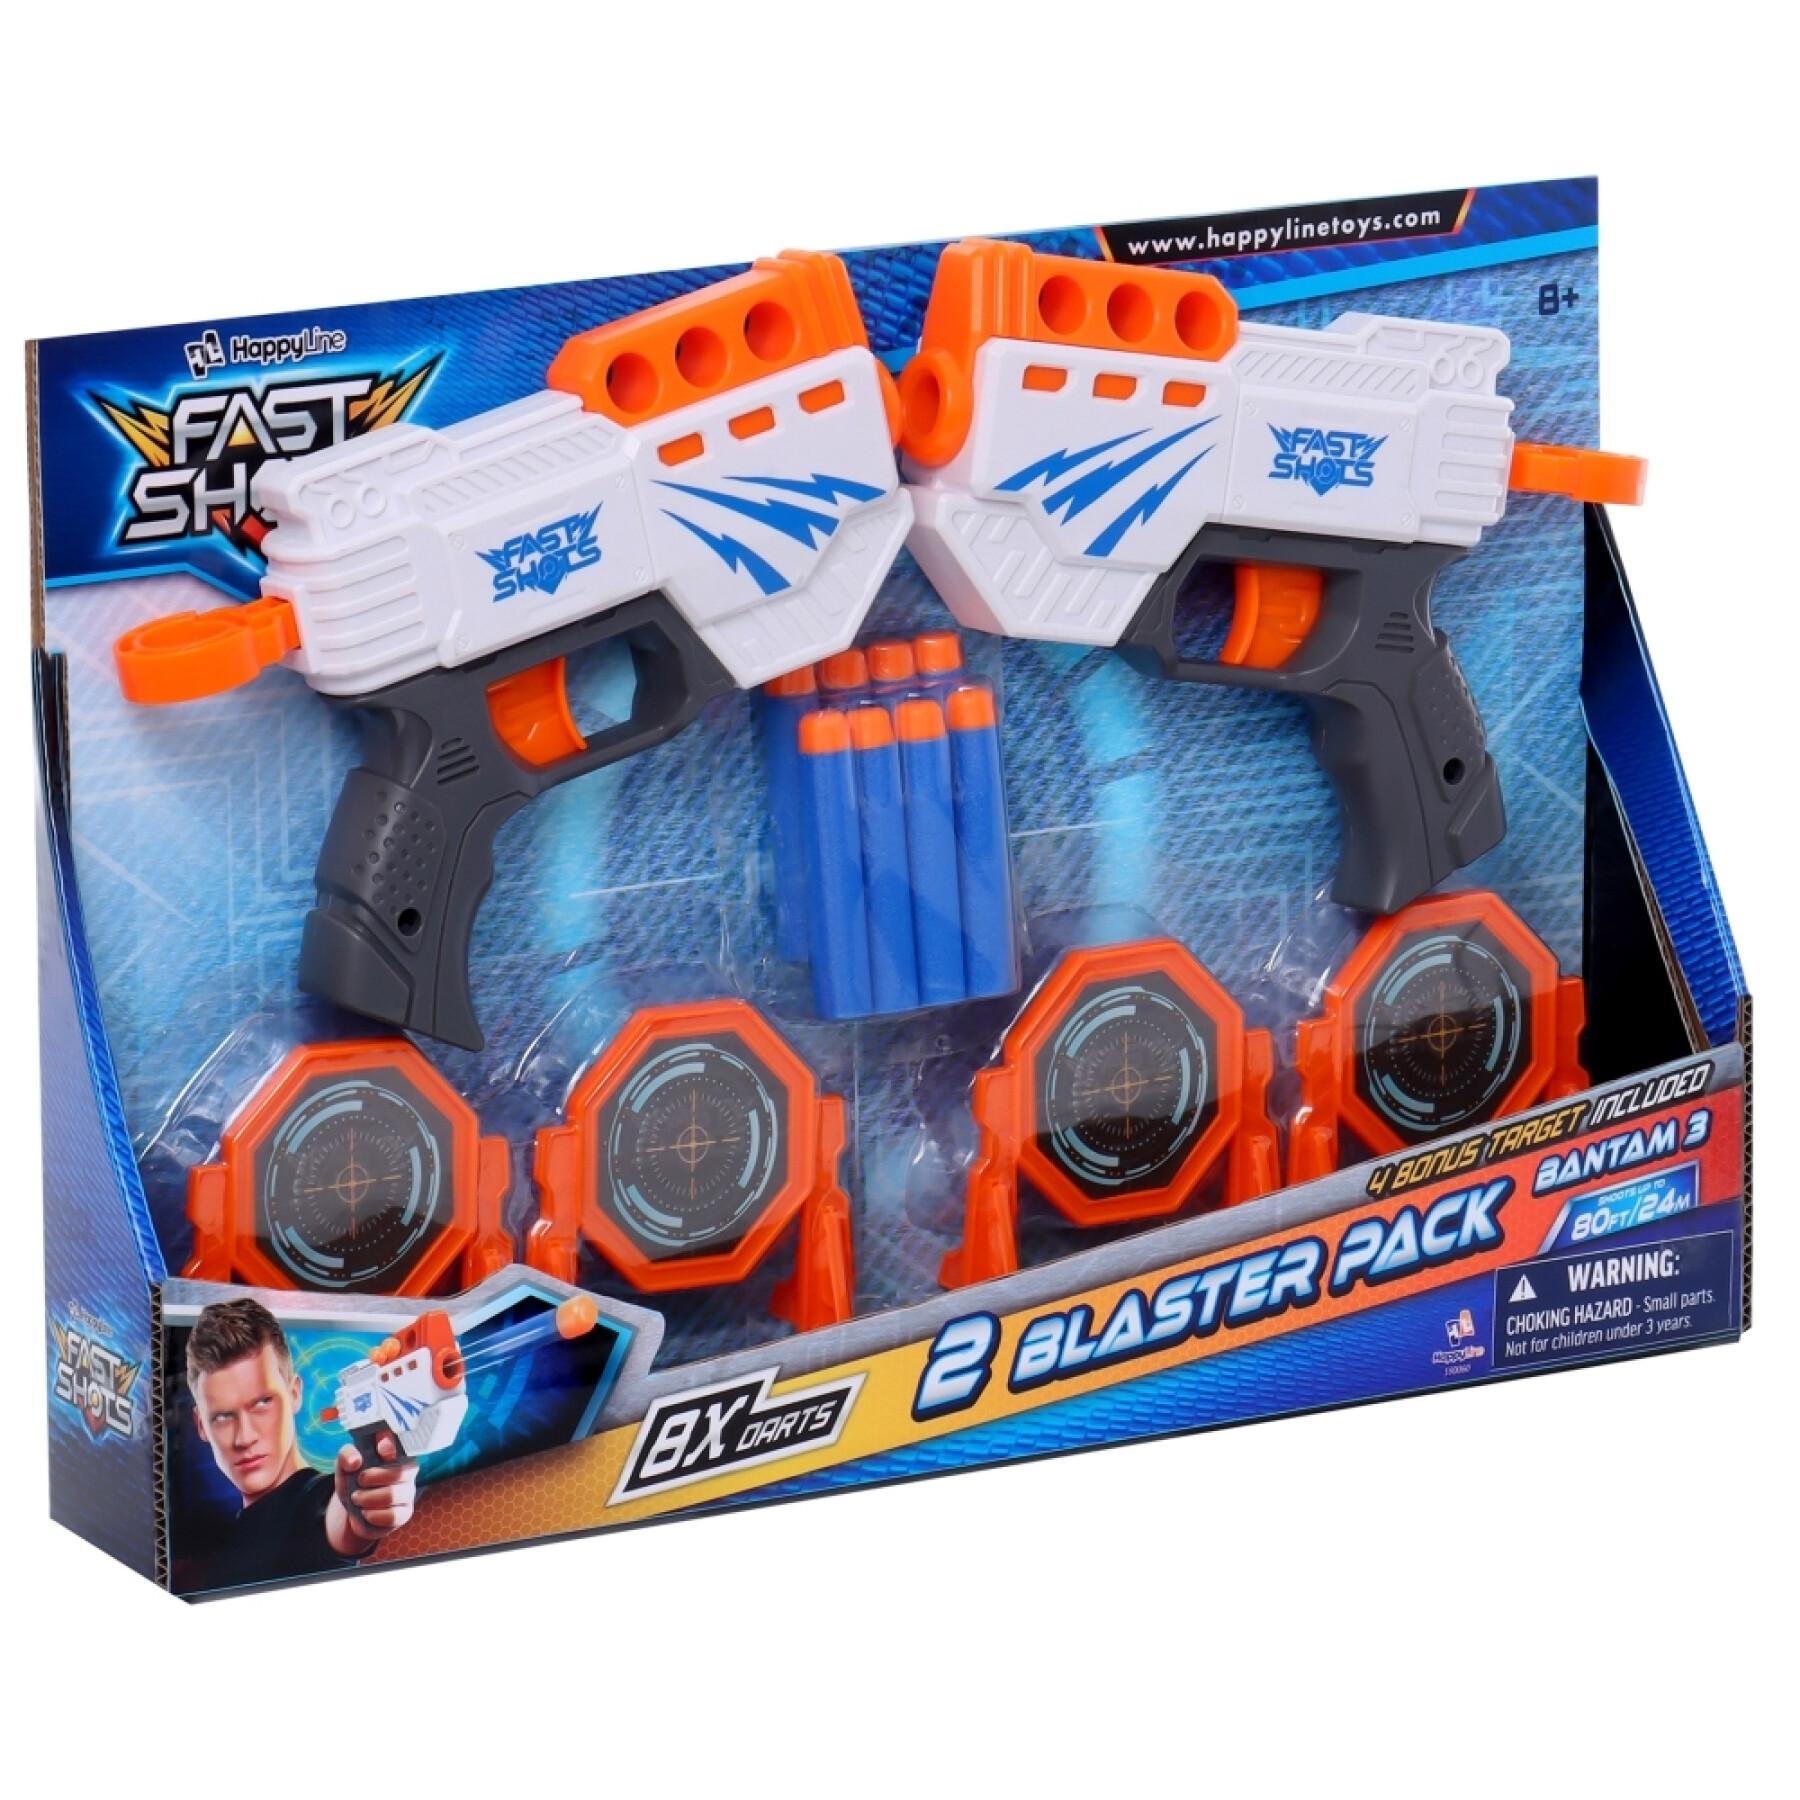 Set with 2 dart guns Happyline Toys